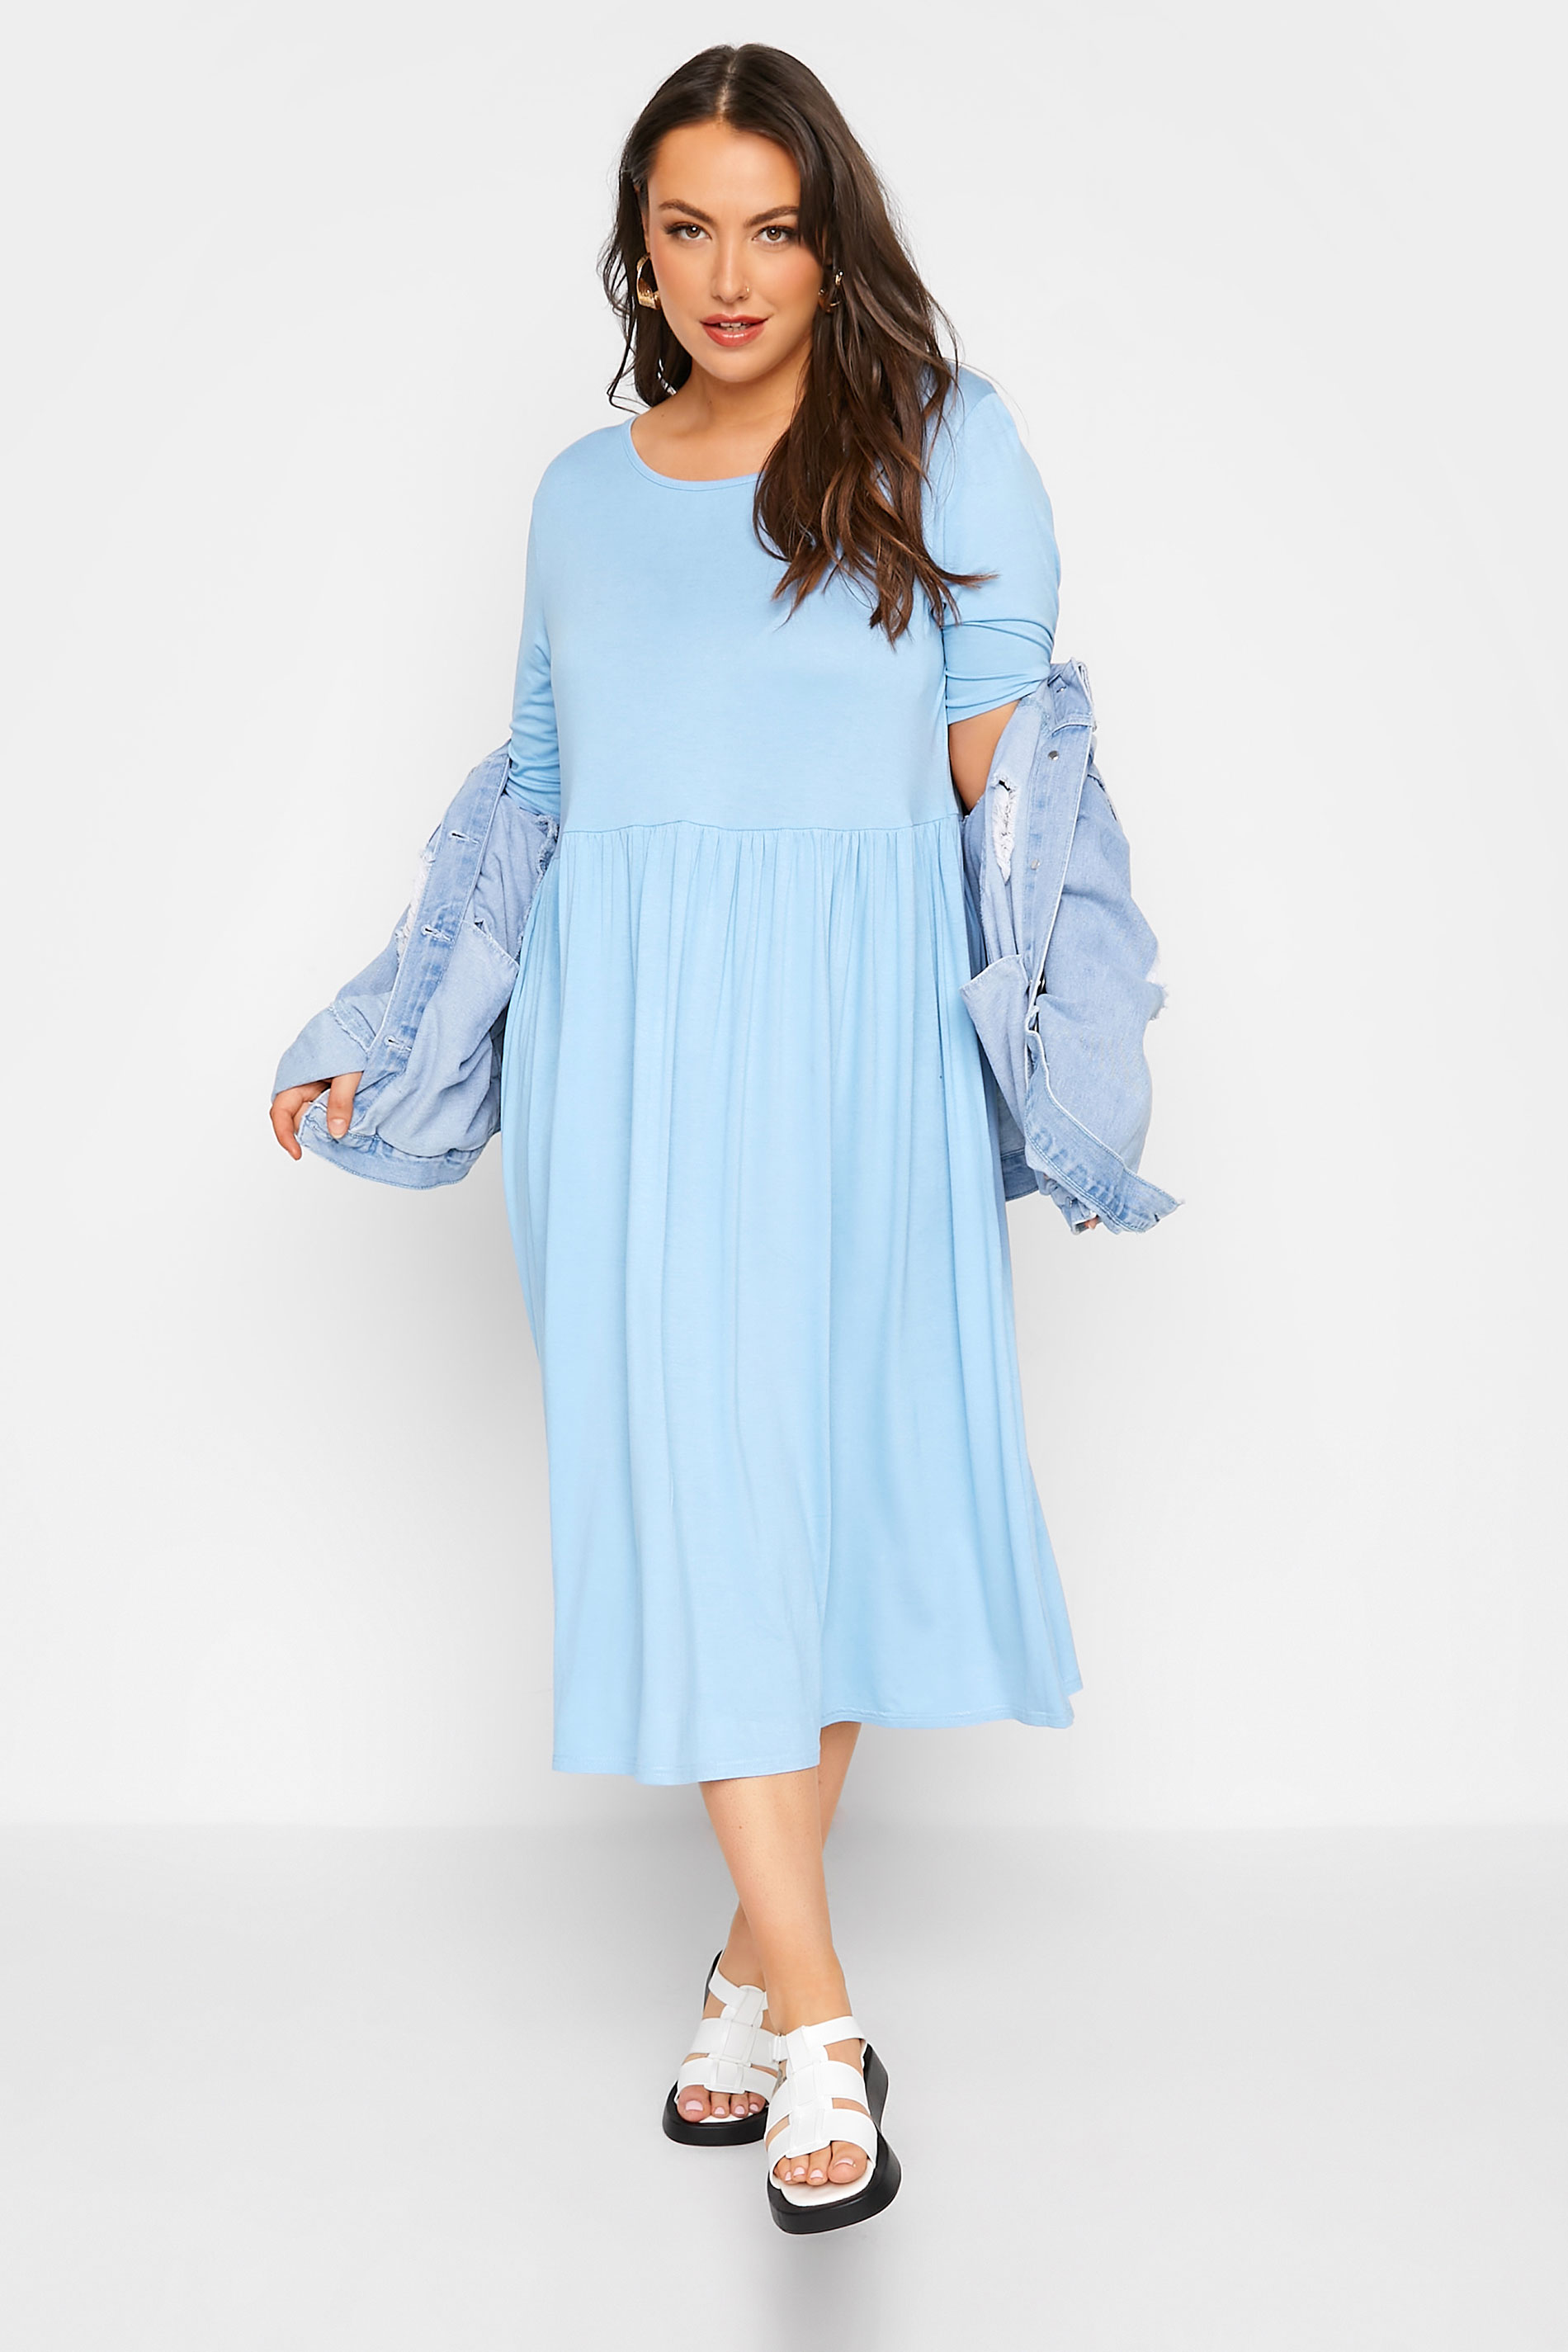 Robes Grande Taille Grande taille  Robes Smocké | LIMITED COLLECTION - Robe Midi Bleue Ciel Design Uni - IE13890